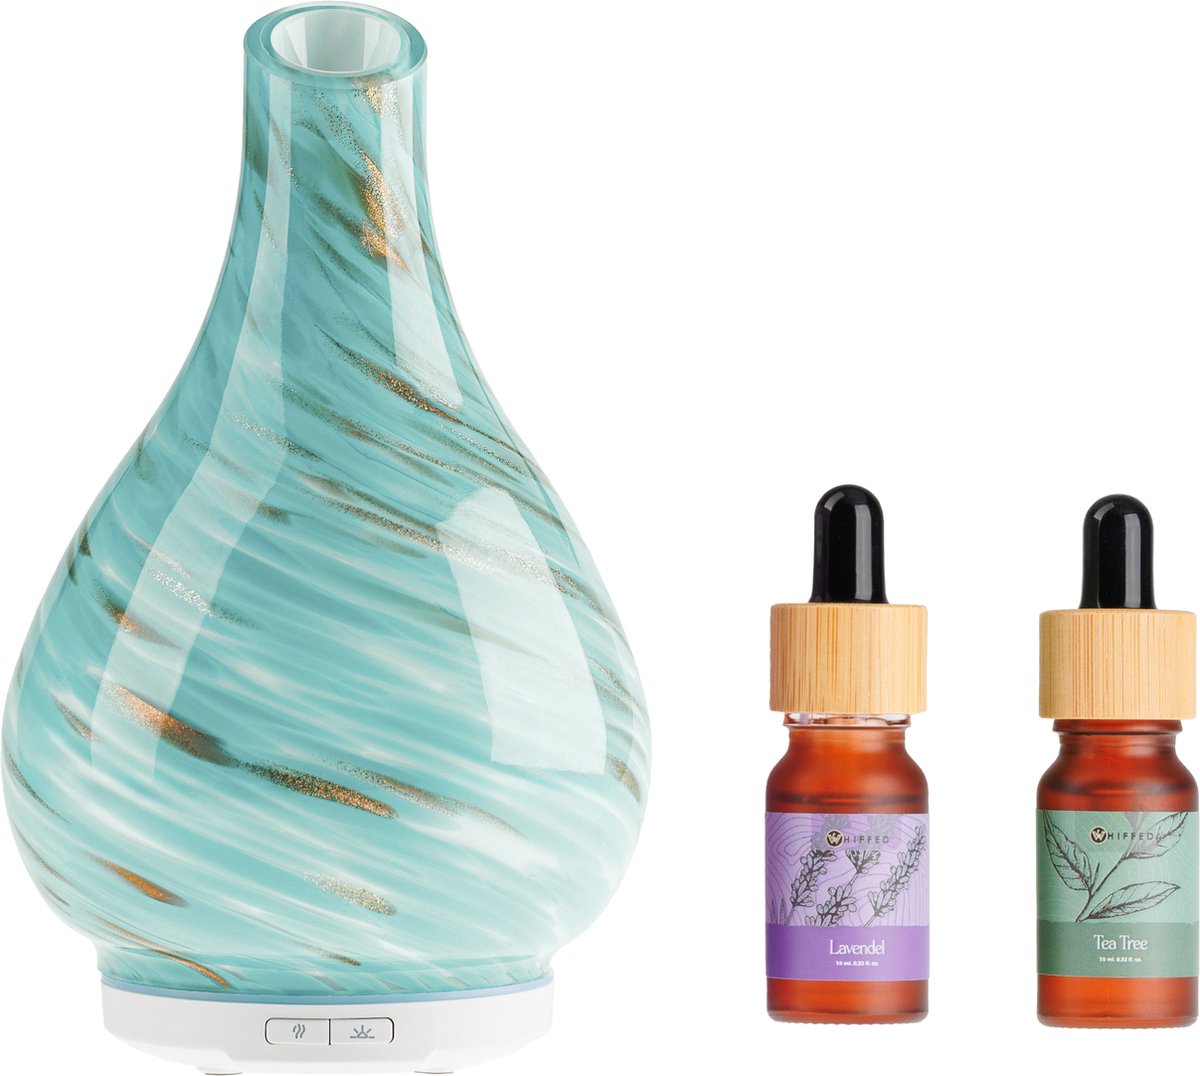 Whiffed® Luxe Aroma Diffuser Incl. 2x Etherische olie - Lavendel - Tea Tree - Geurverspreider met Glazen Design - 8 uur Aromatherapie - Tot 80m2 - Essentiële Olie Vernevelaar & Diffuser